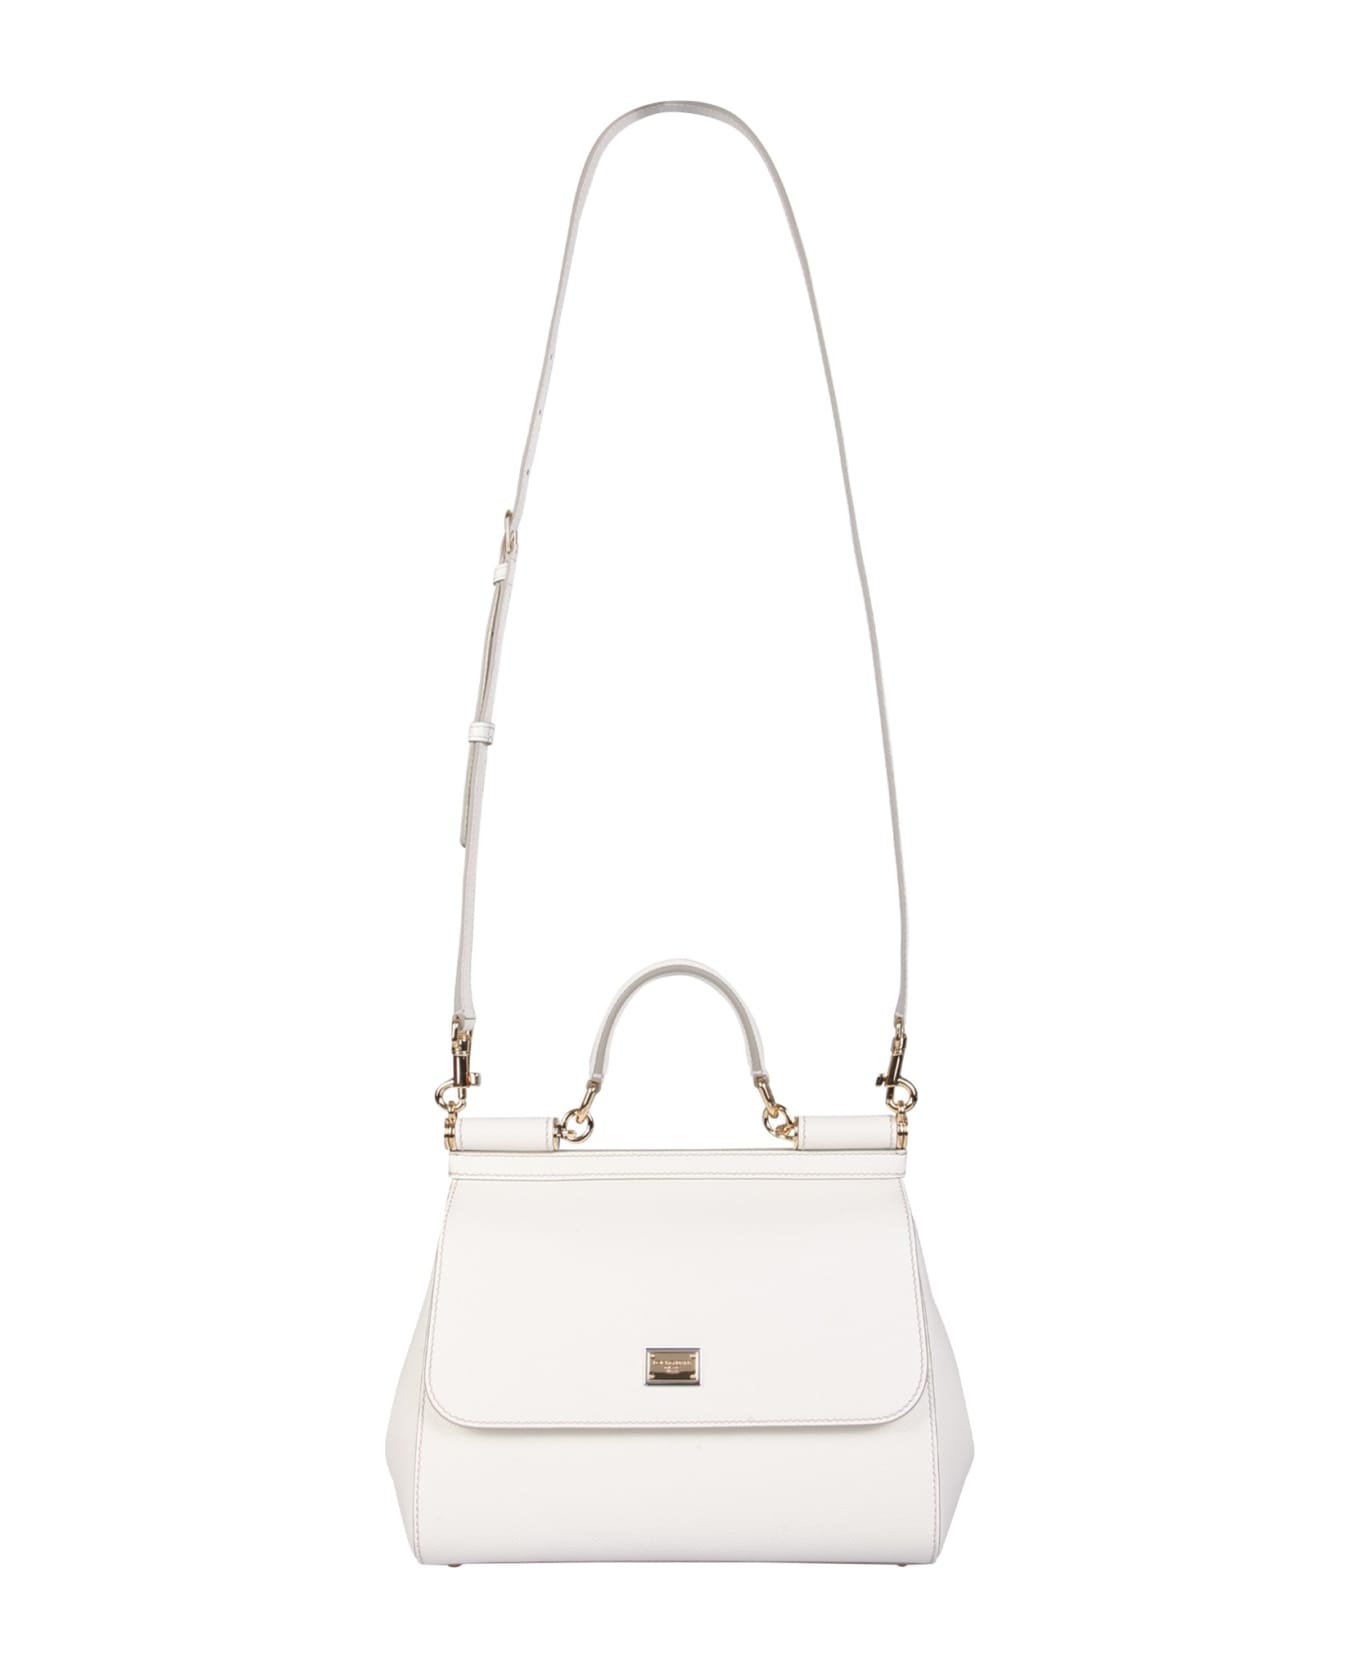 Dolce & Gabbana Sicily Handbag - White